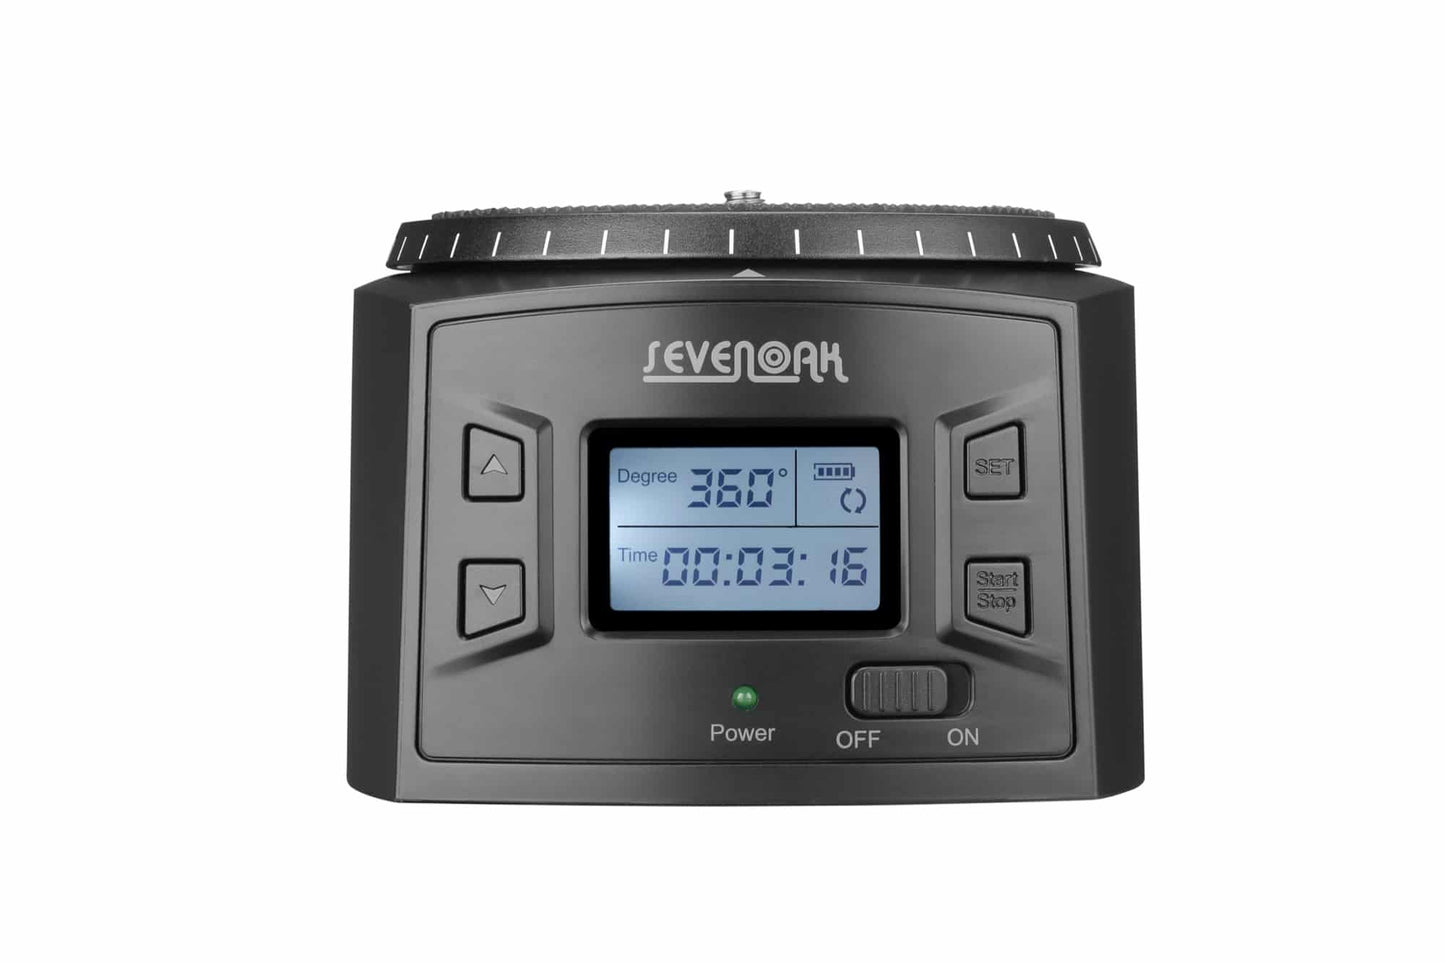 Sevenoak 360 degrees electronic panorama head SK-EBH2000